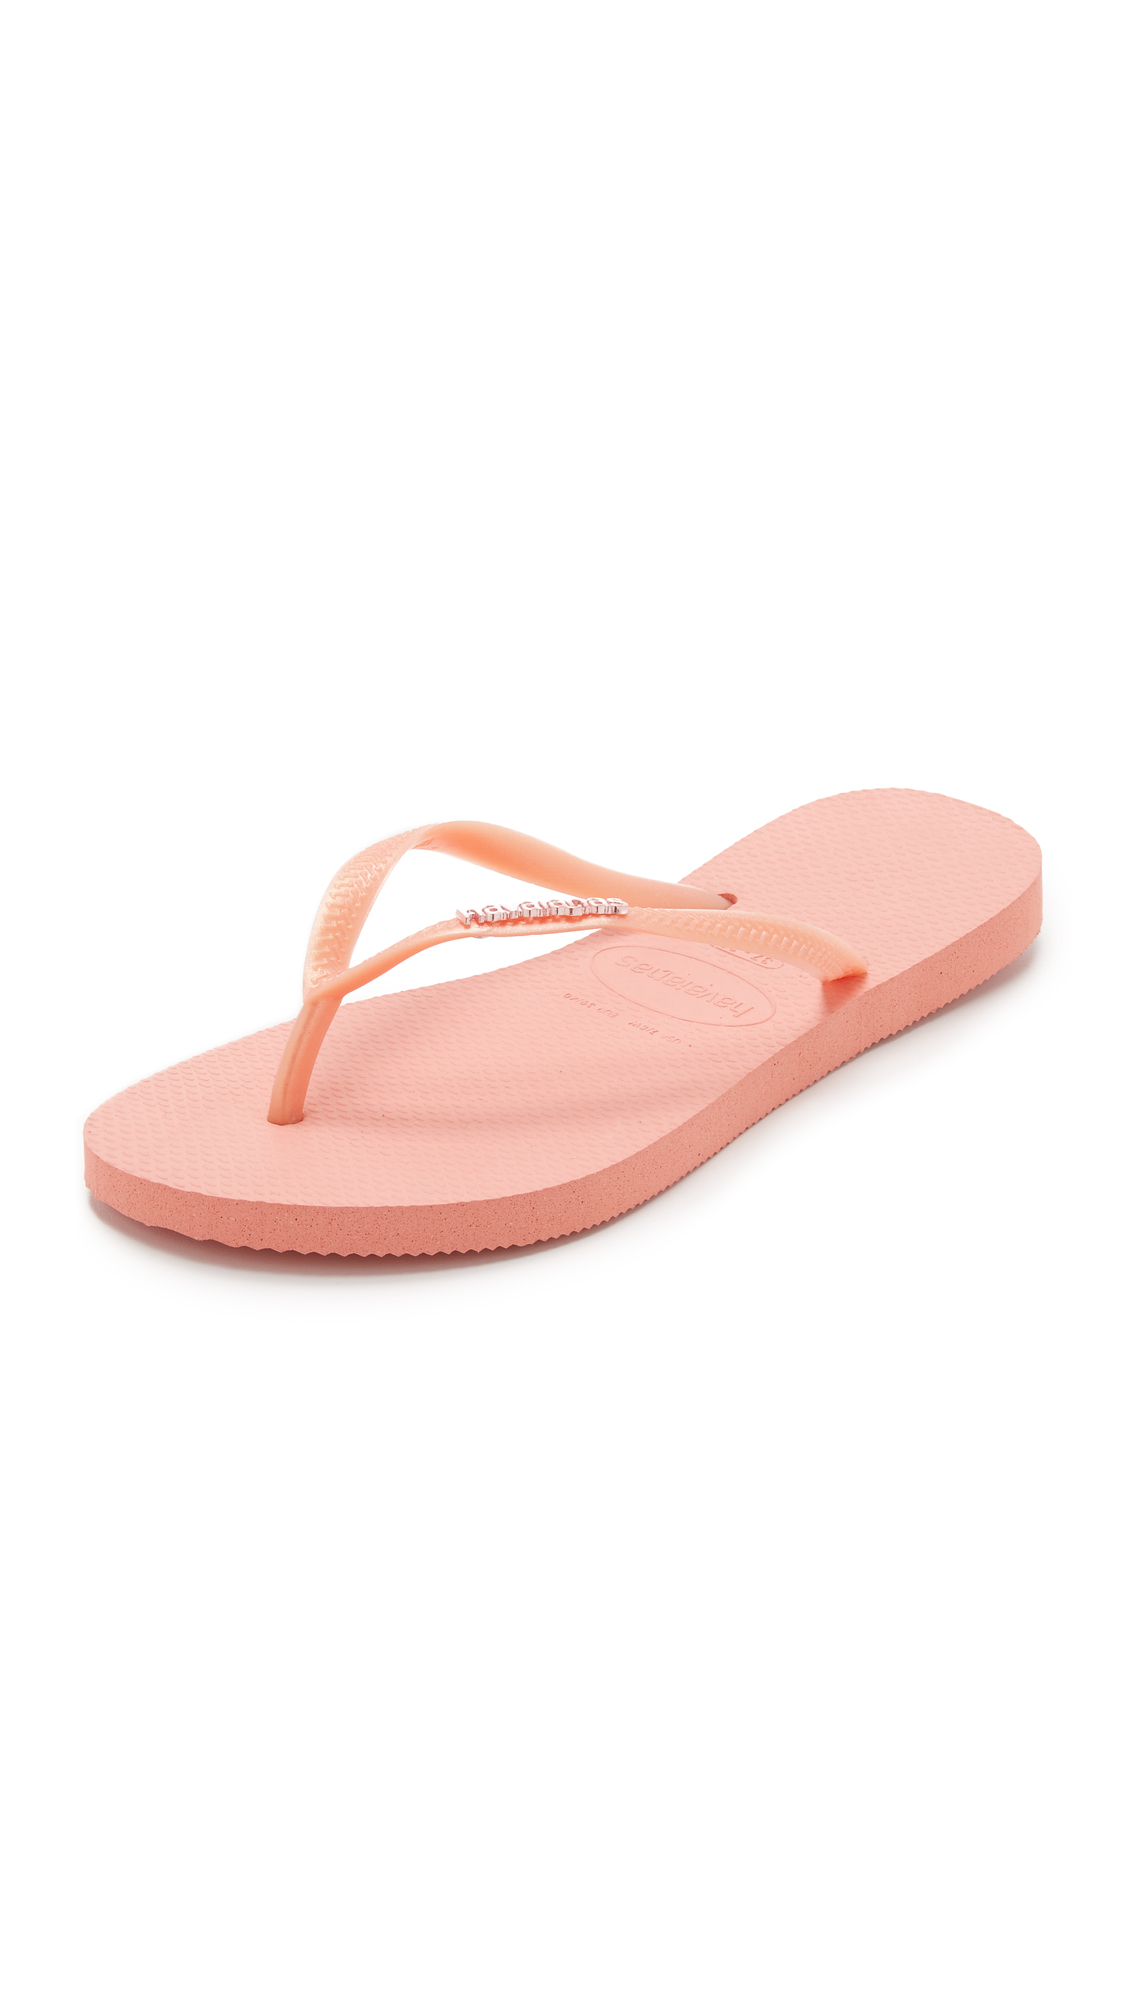 Lyst - Havaianas Slim Logo Metallic Flip Flops in Pink